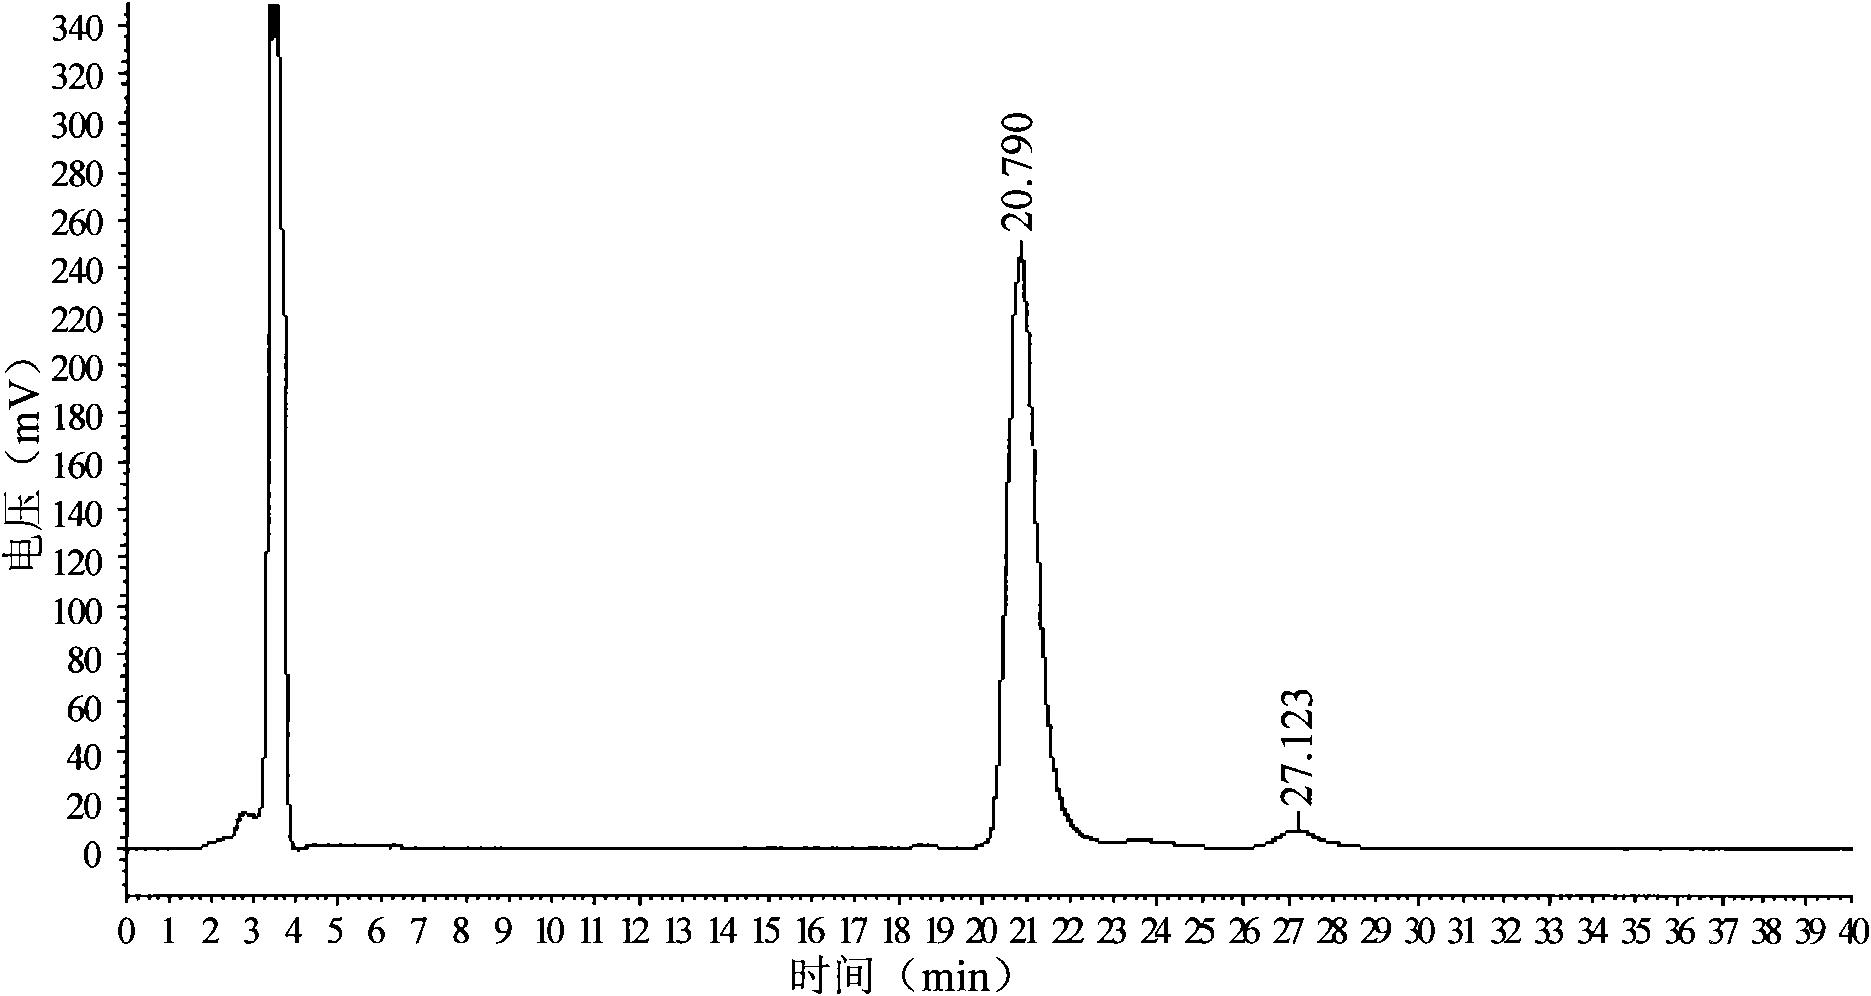 HPLC (High Performance Liquid Chromatography) method for measuring content of D-4-methylsulfonylphenyl serine ethyl ester